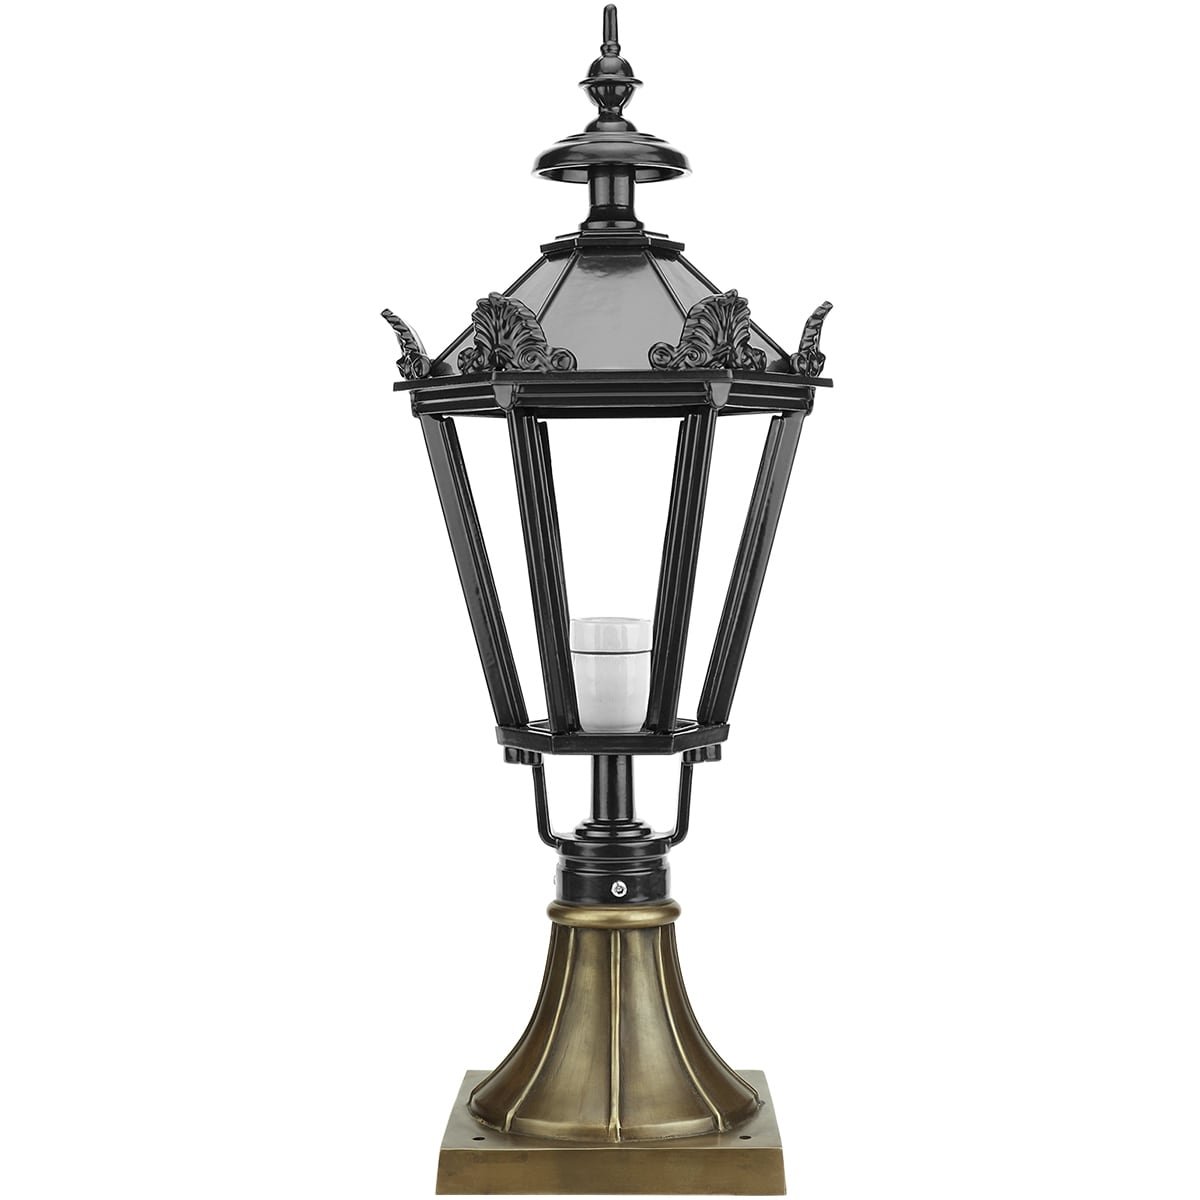 Opschudding Gooi Civiel Lantaarn lamp Beuningen brons - 79 cm | Manves.nl